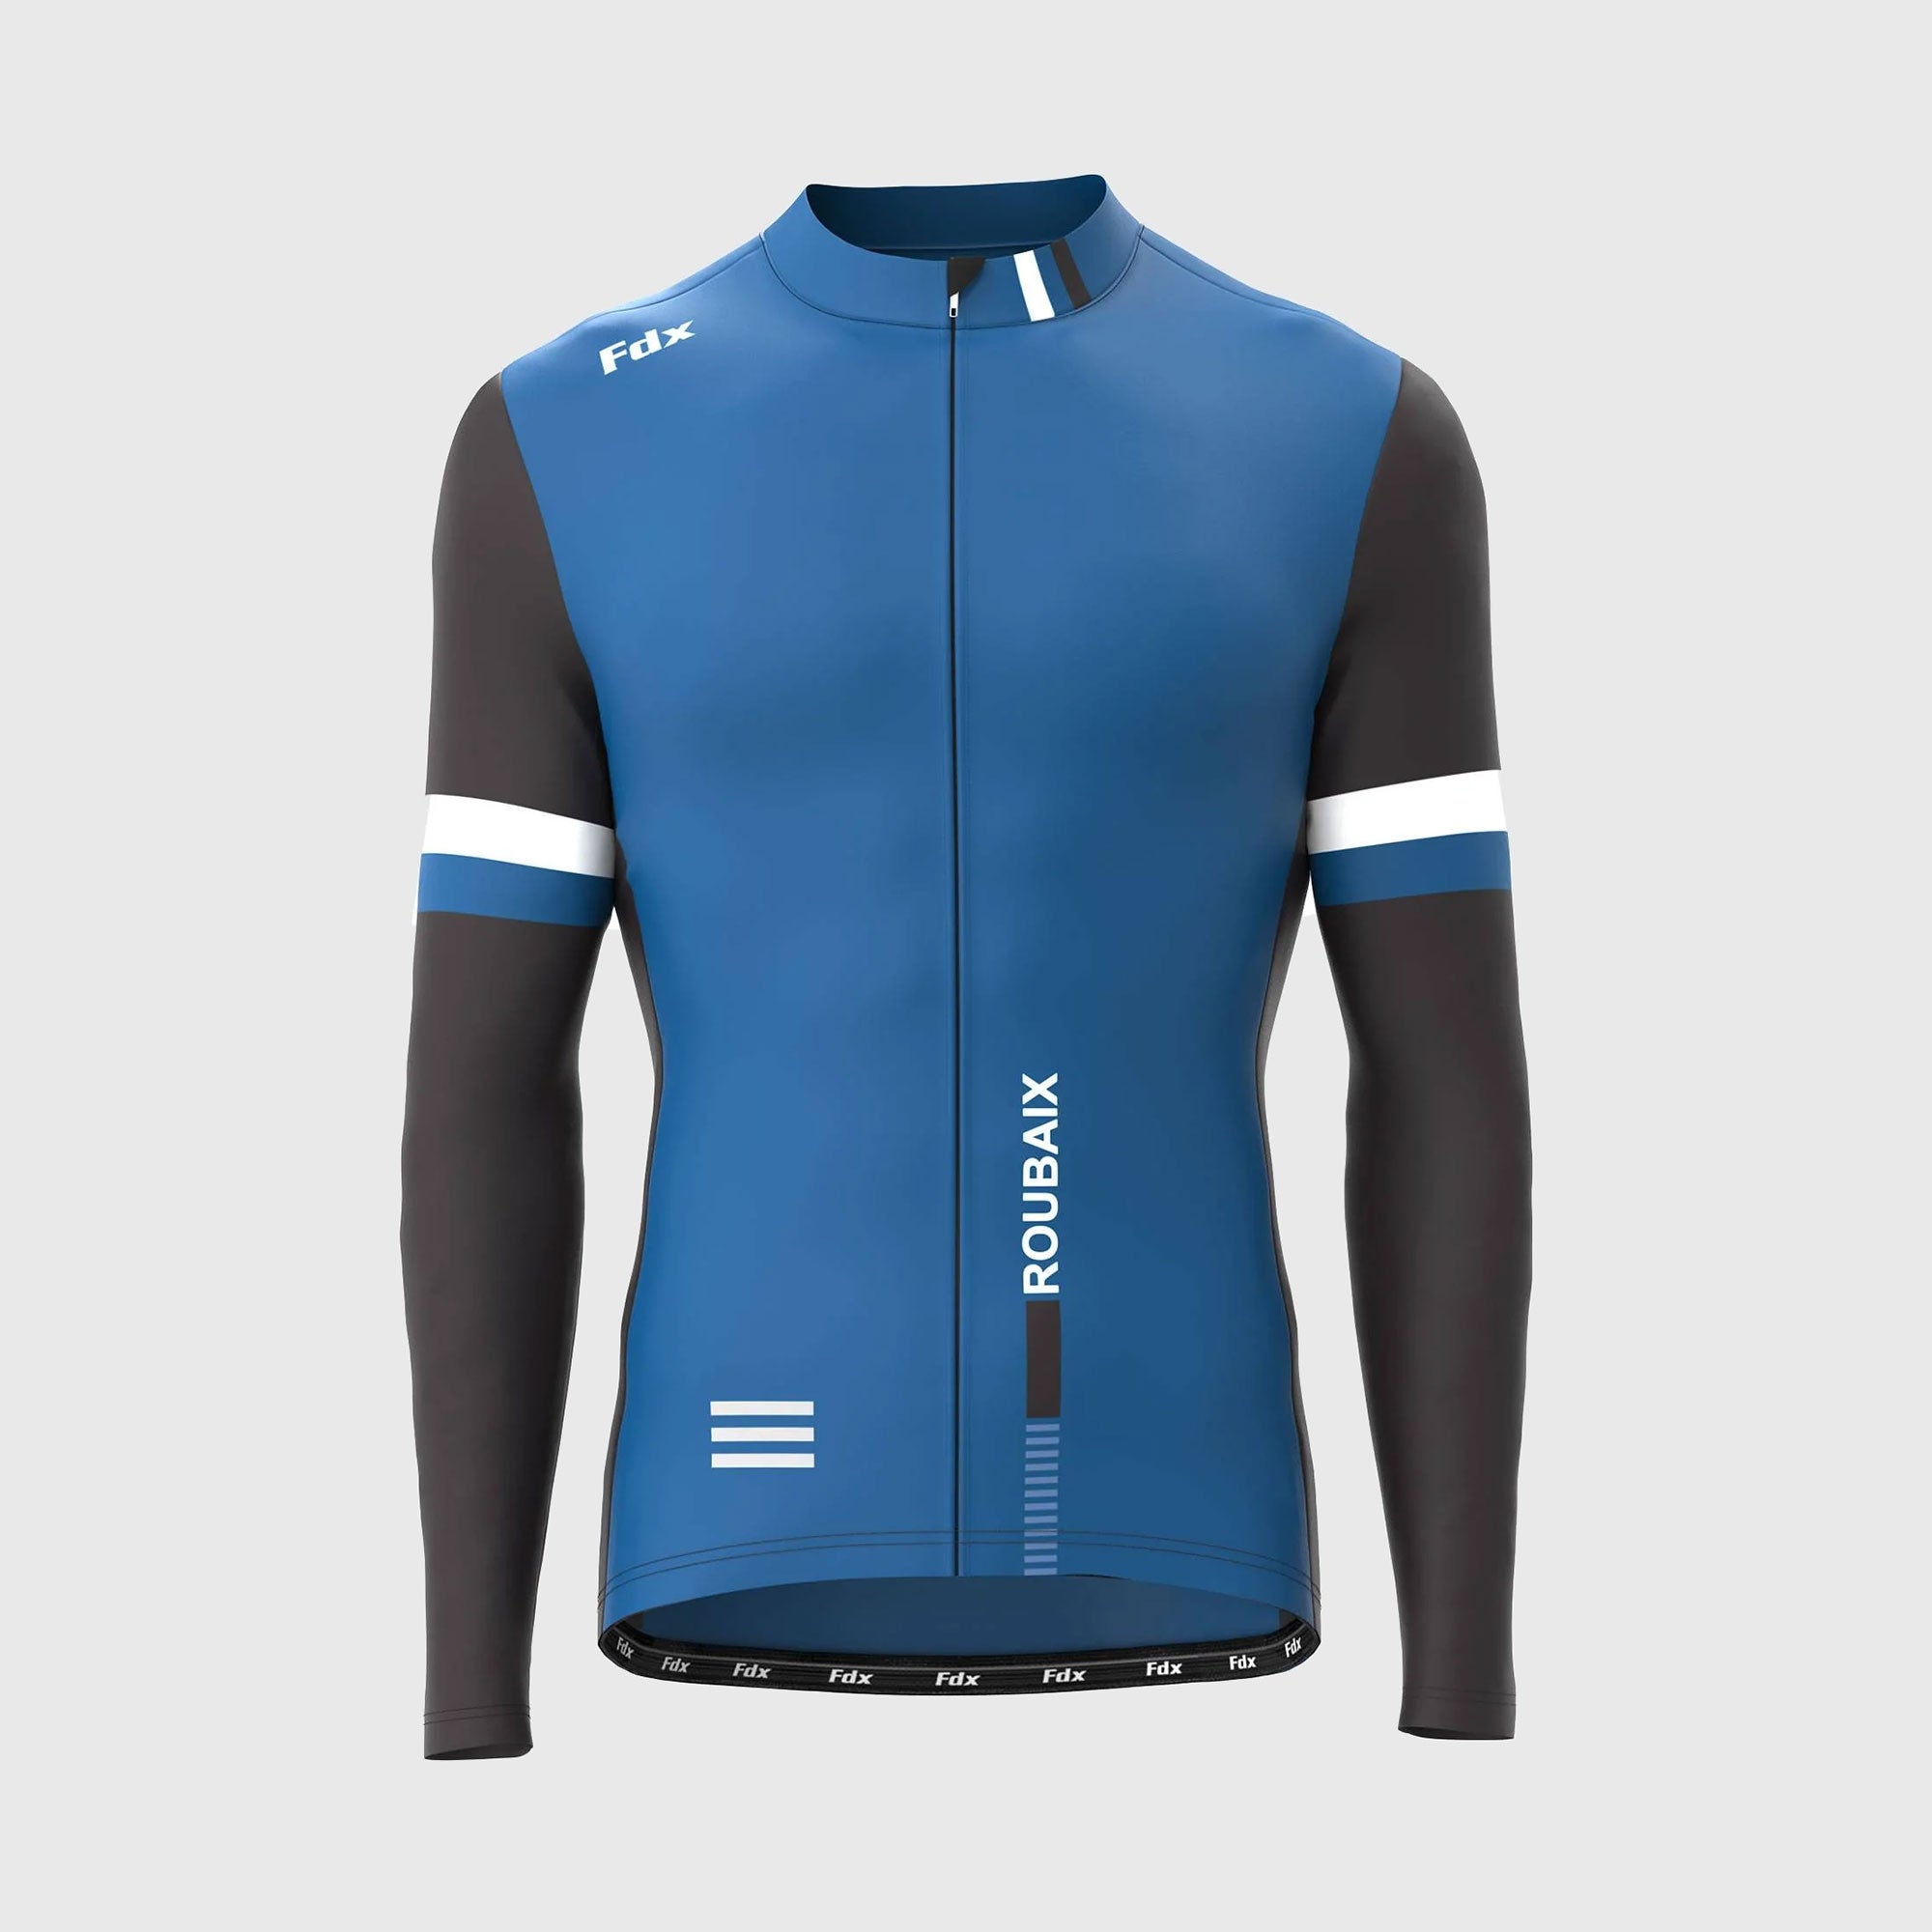 Fdx Mens Blue Long Sleeve Cycling Jersey for Winter Roubaix Thermal Fleece Road Bike Wear Top Full Zipper, Pockets & Hi-viz Reflectors - Limited Edition